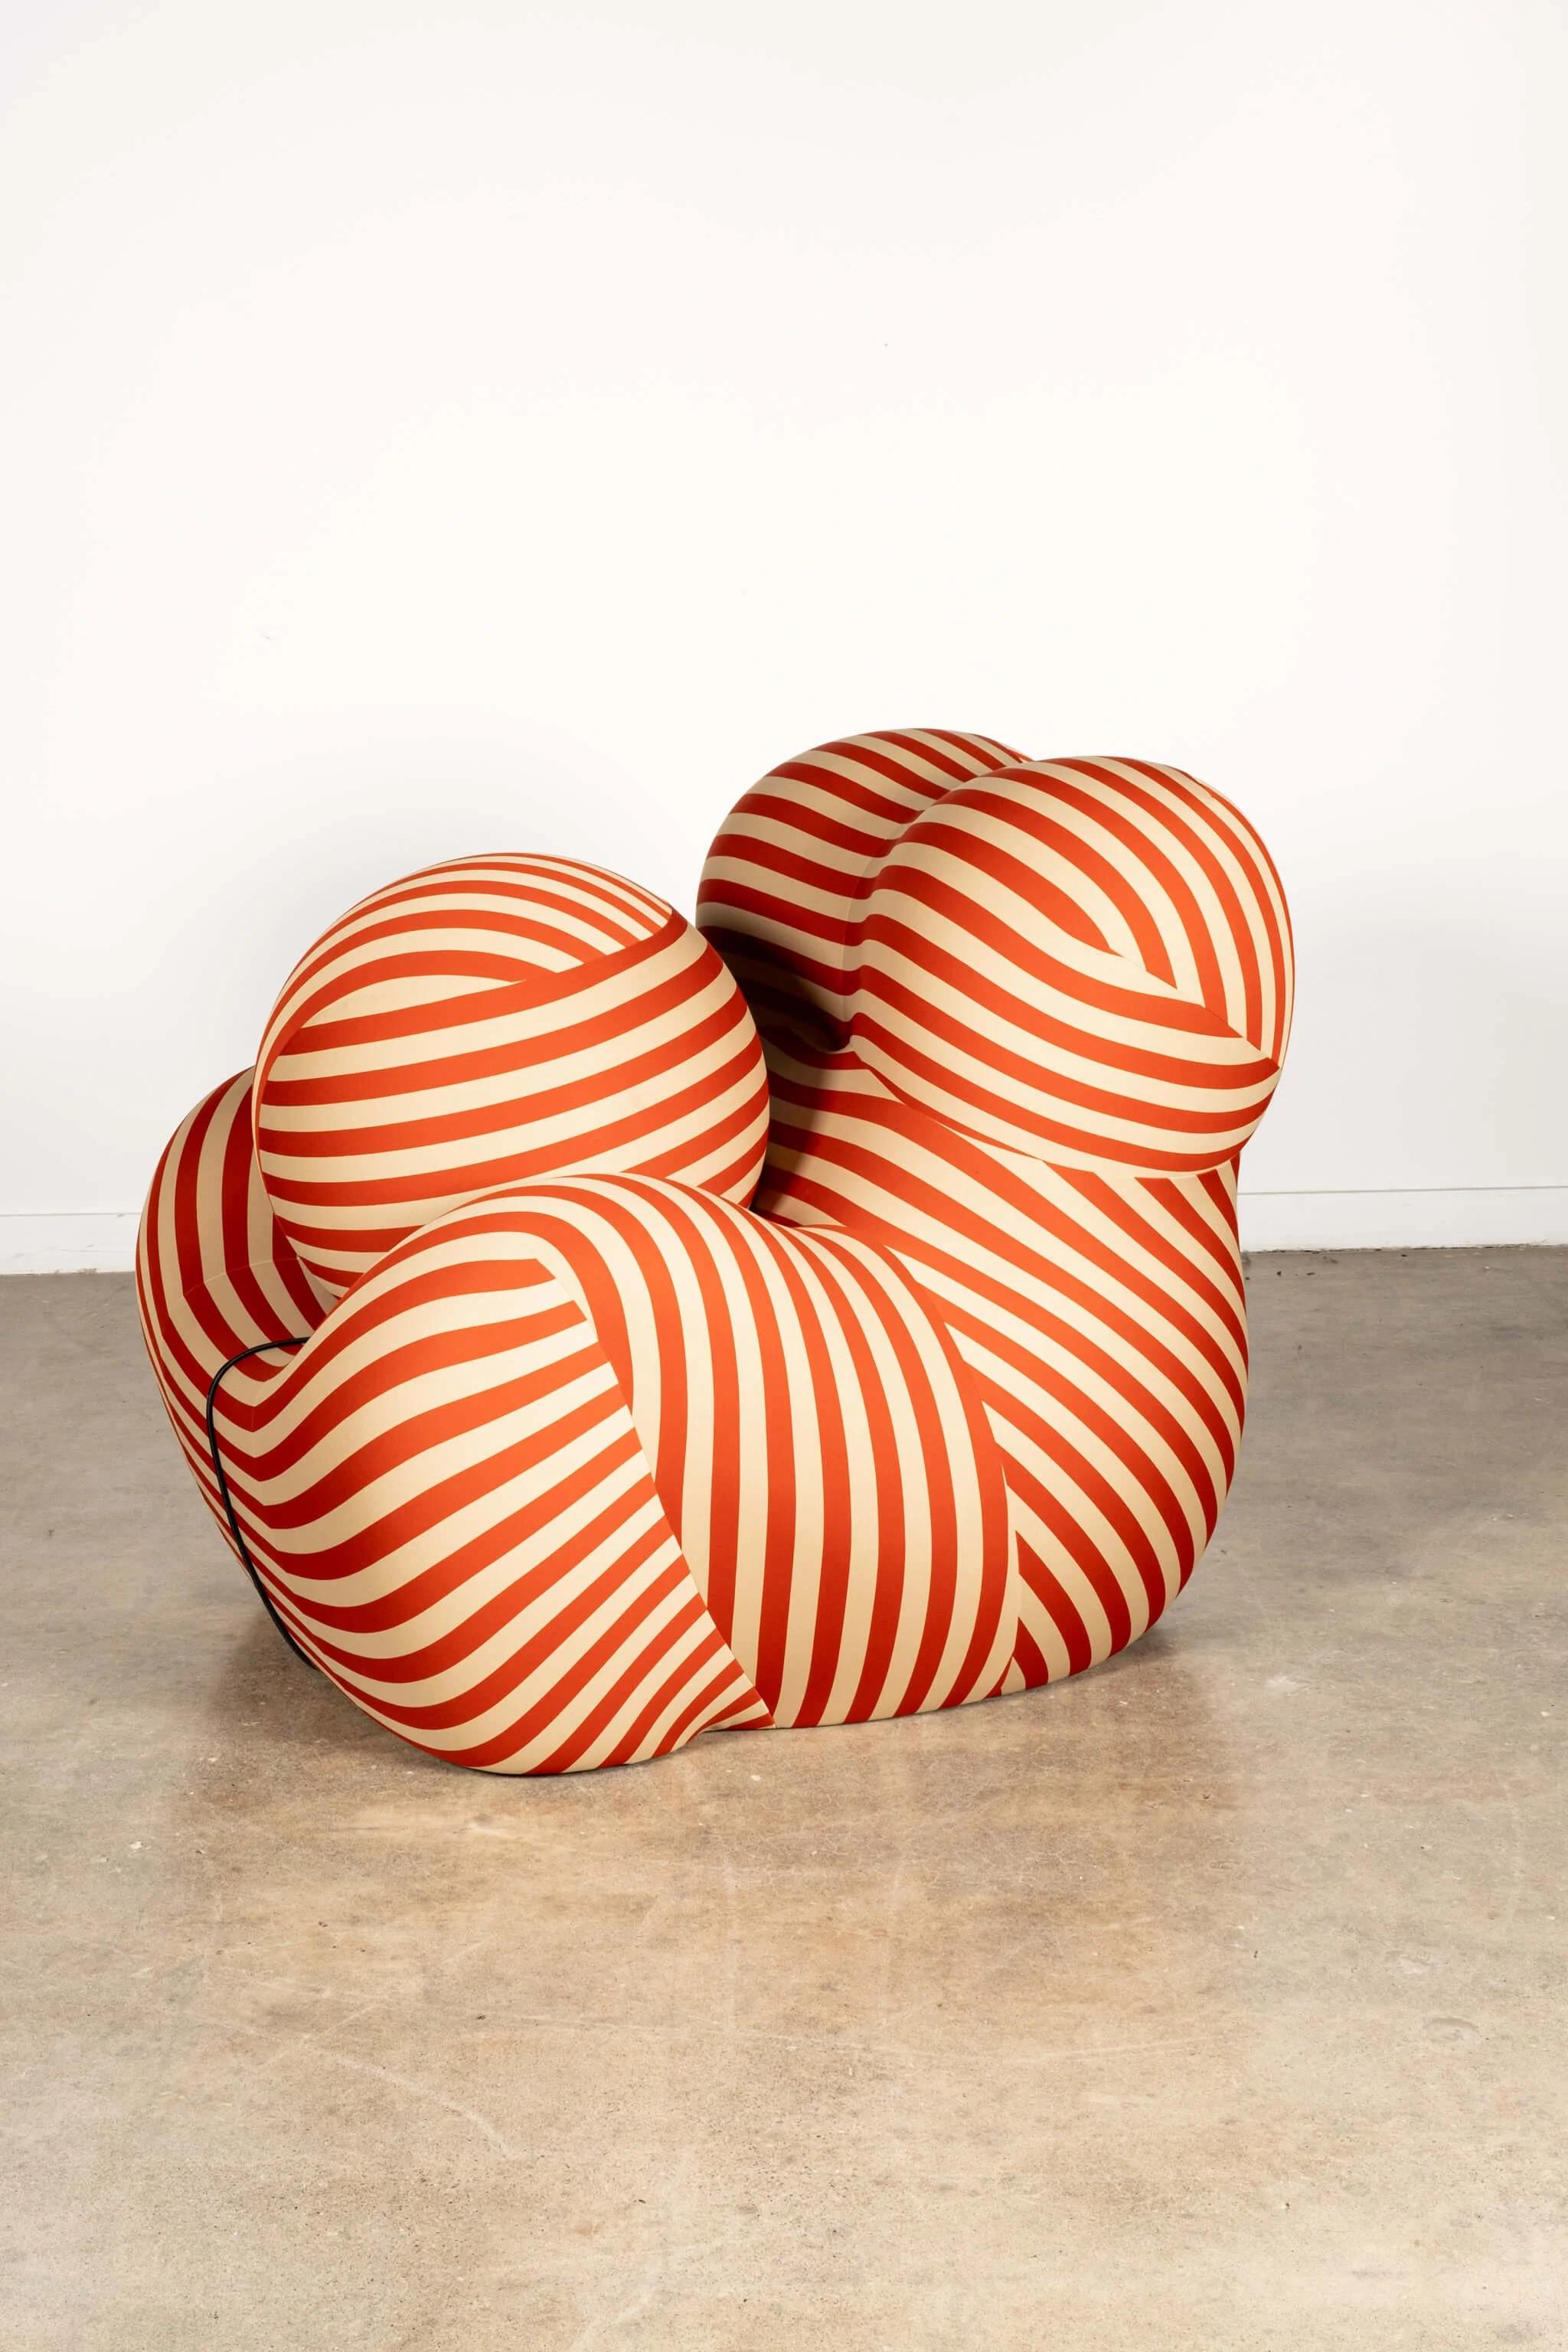 Post-Modern B&B Italia 'La Mamma' Up 5/6 Lounge Chair & Ottoman, Red Stripe by Gaetano Pesce For Sale